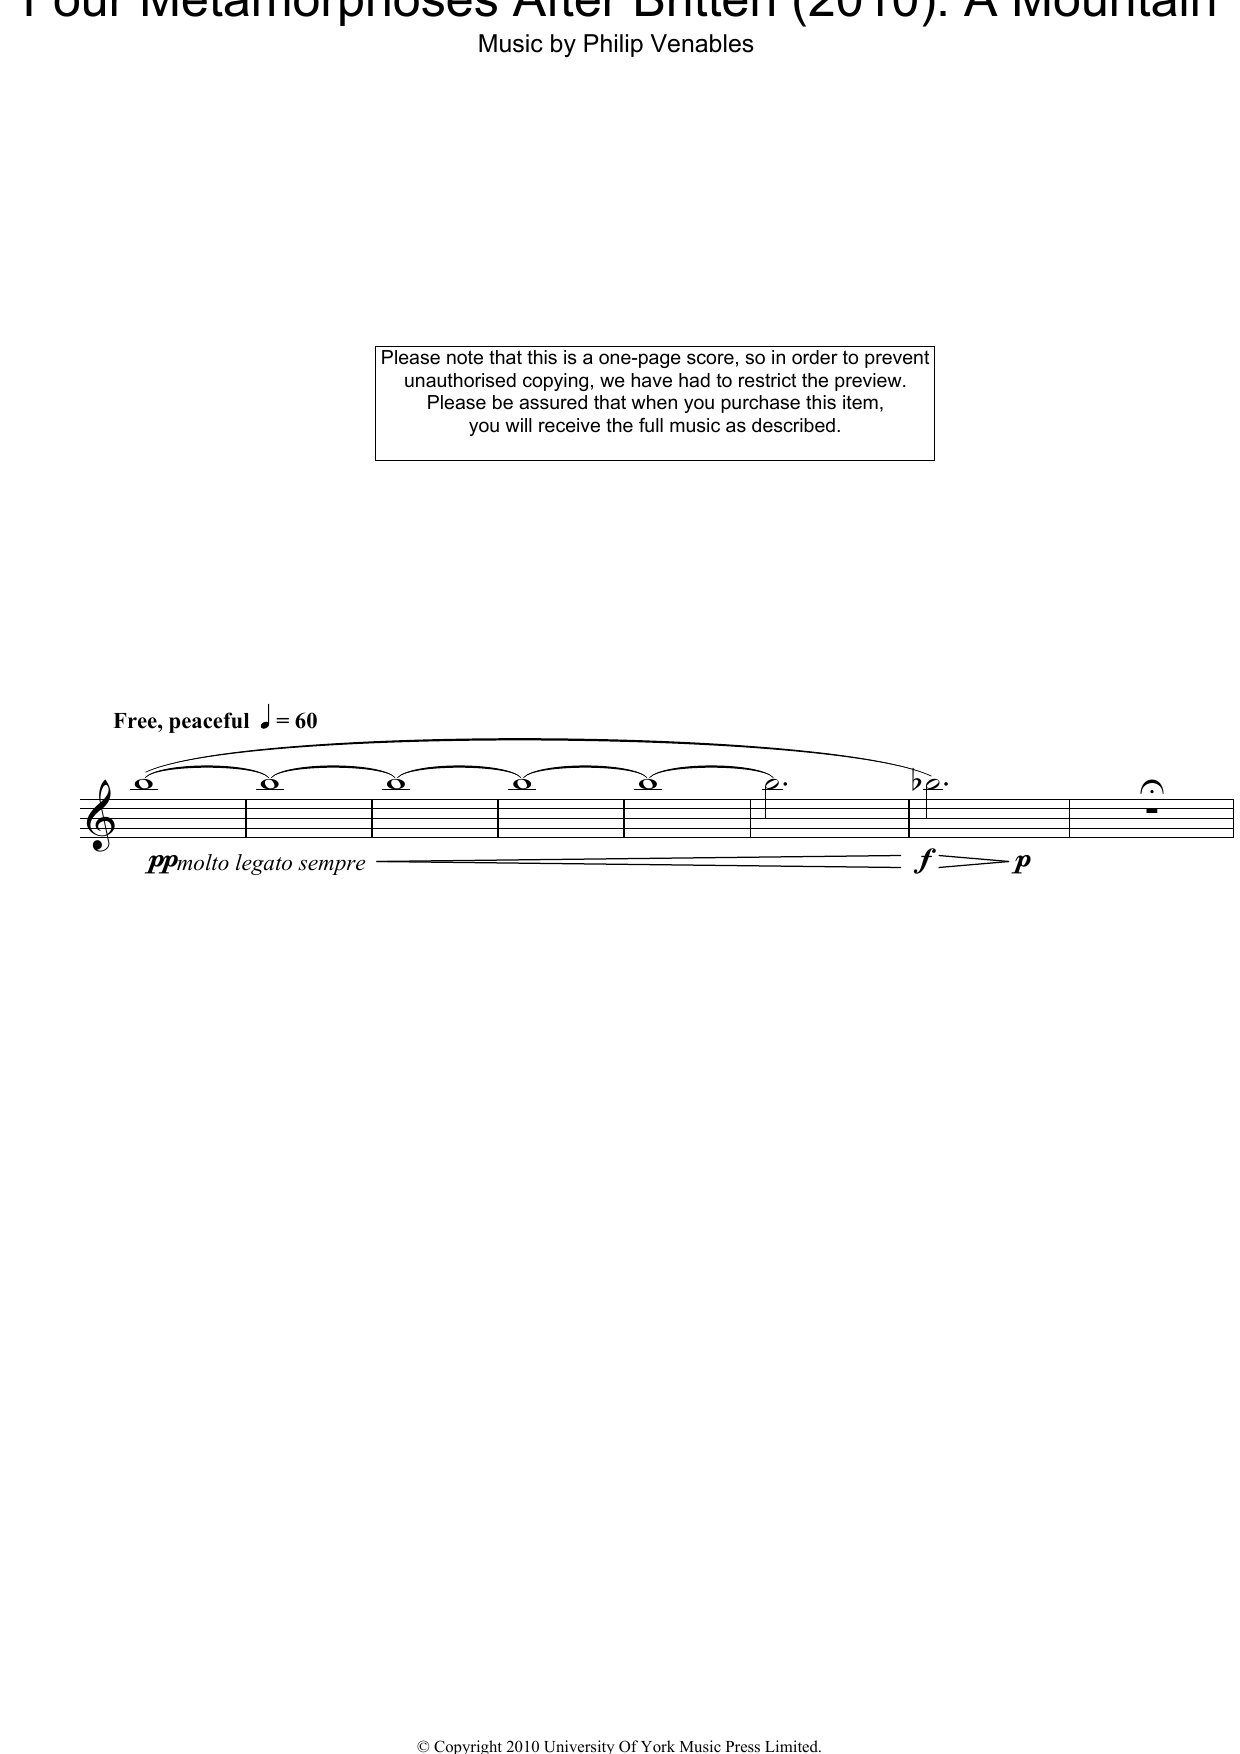 Download Philip Venables Four Metamorphoses After Britten (2010) Sheet Music